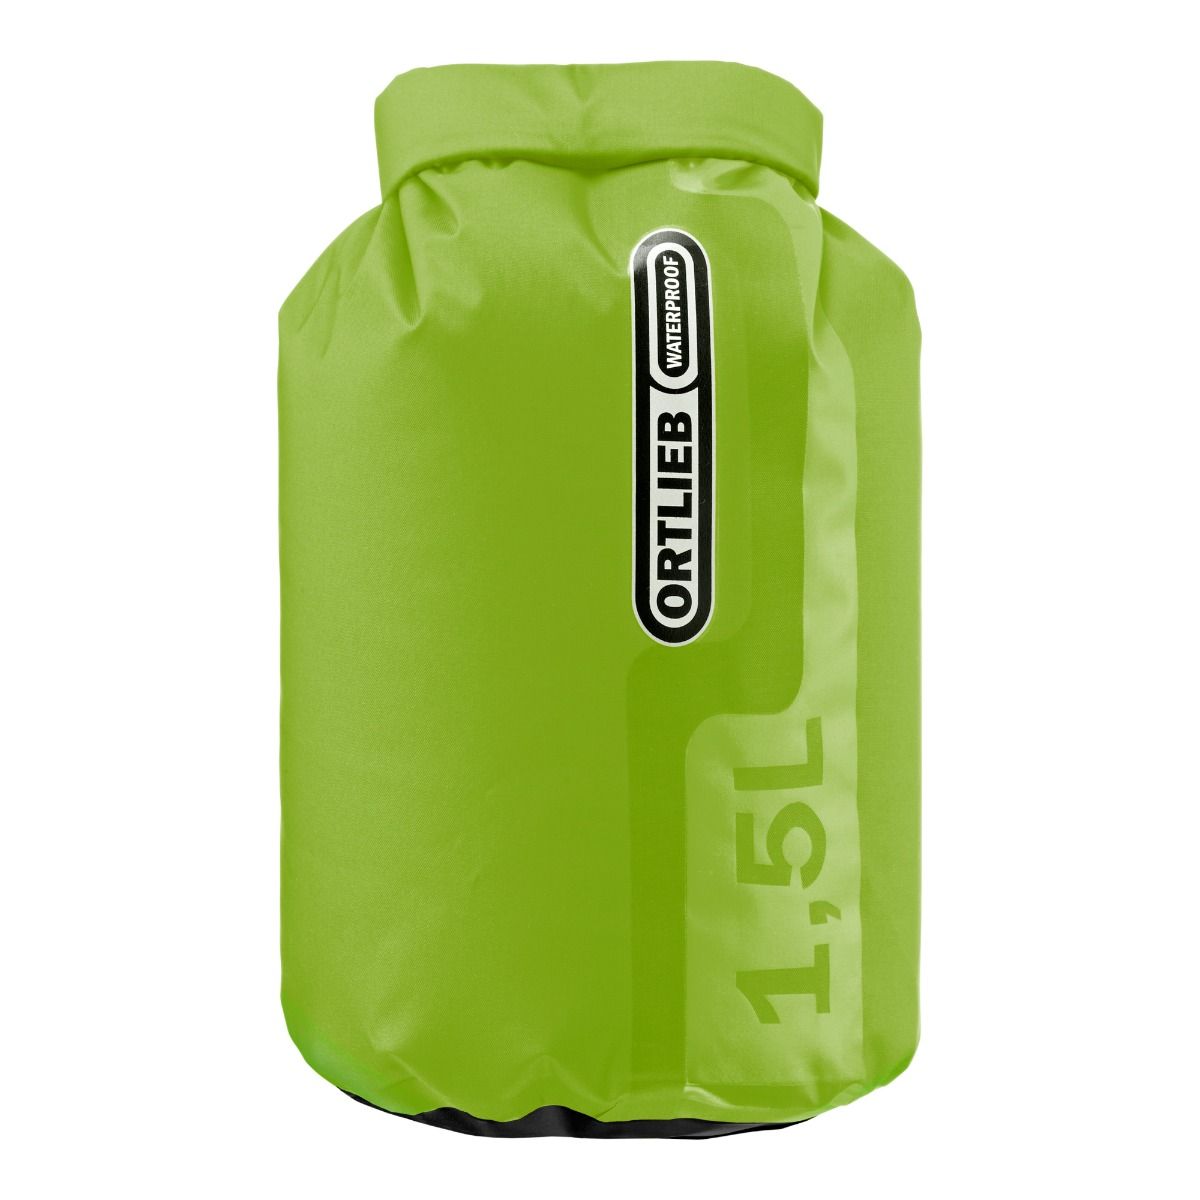 Immagine di ORTLIEB Dry-Bag PS10 - 1.5L Sacco a Pelo Impermeabile - light green